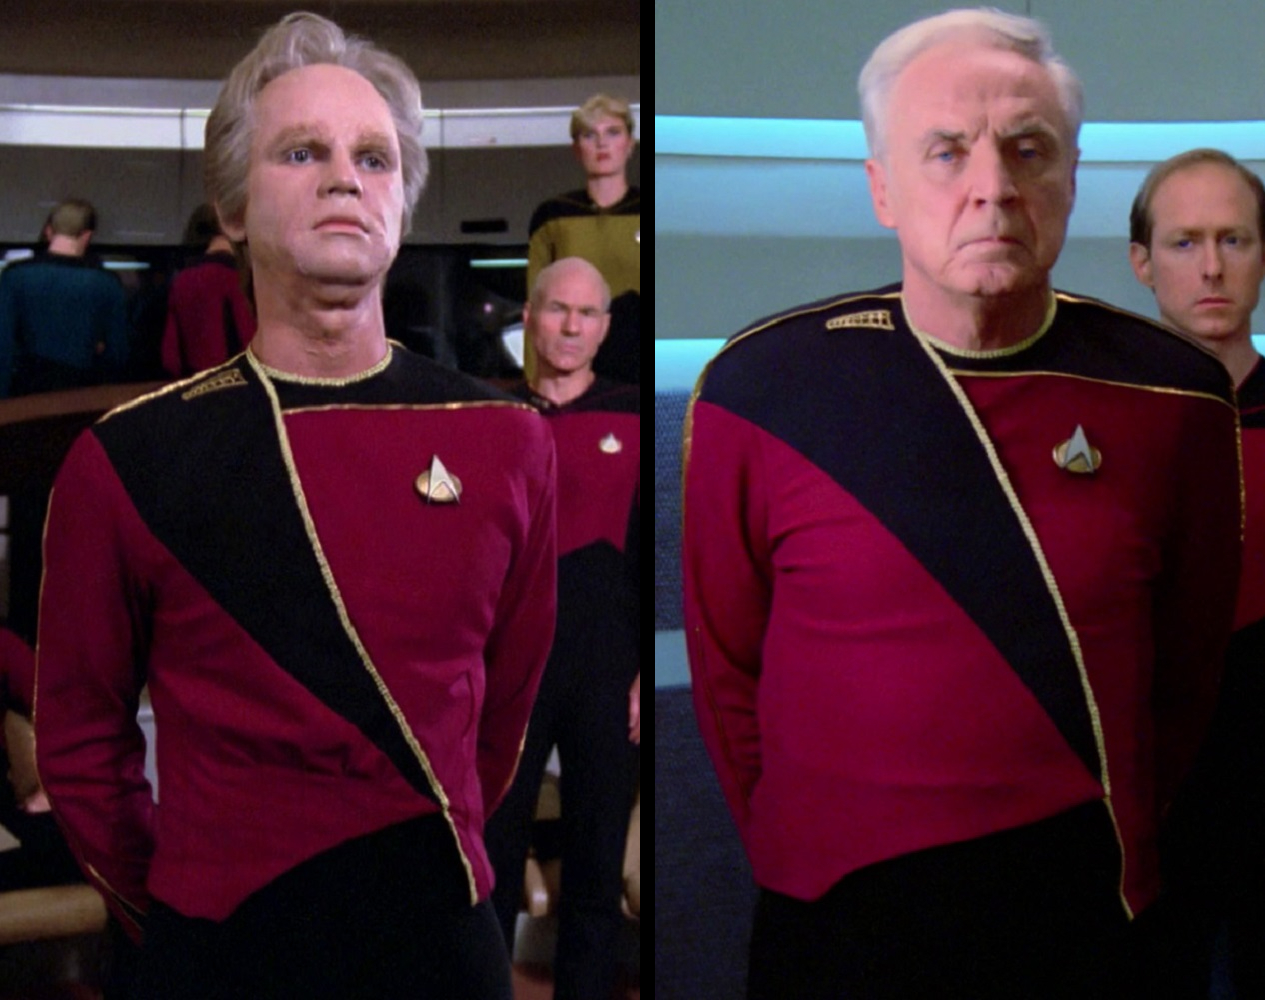 TNG admiral uniform (season 1) analysis - Star Trek Costume Guide